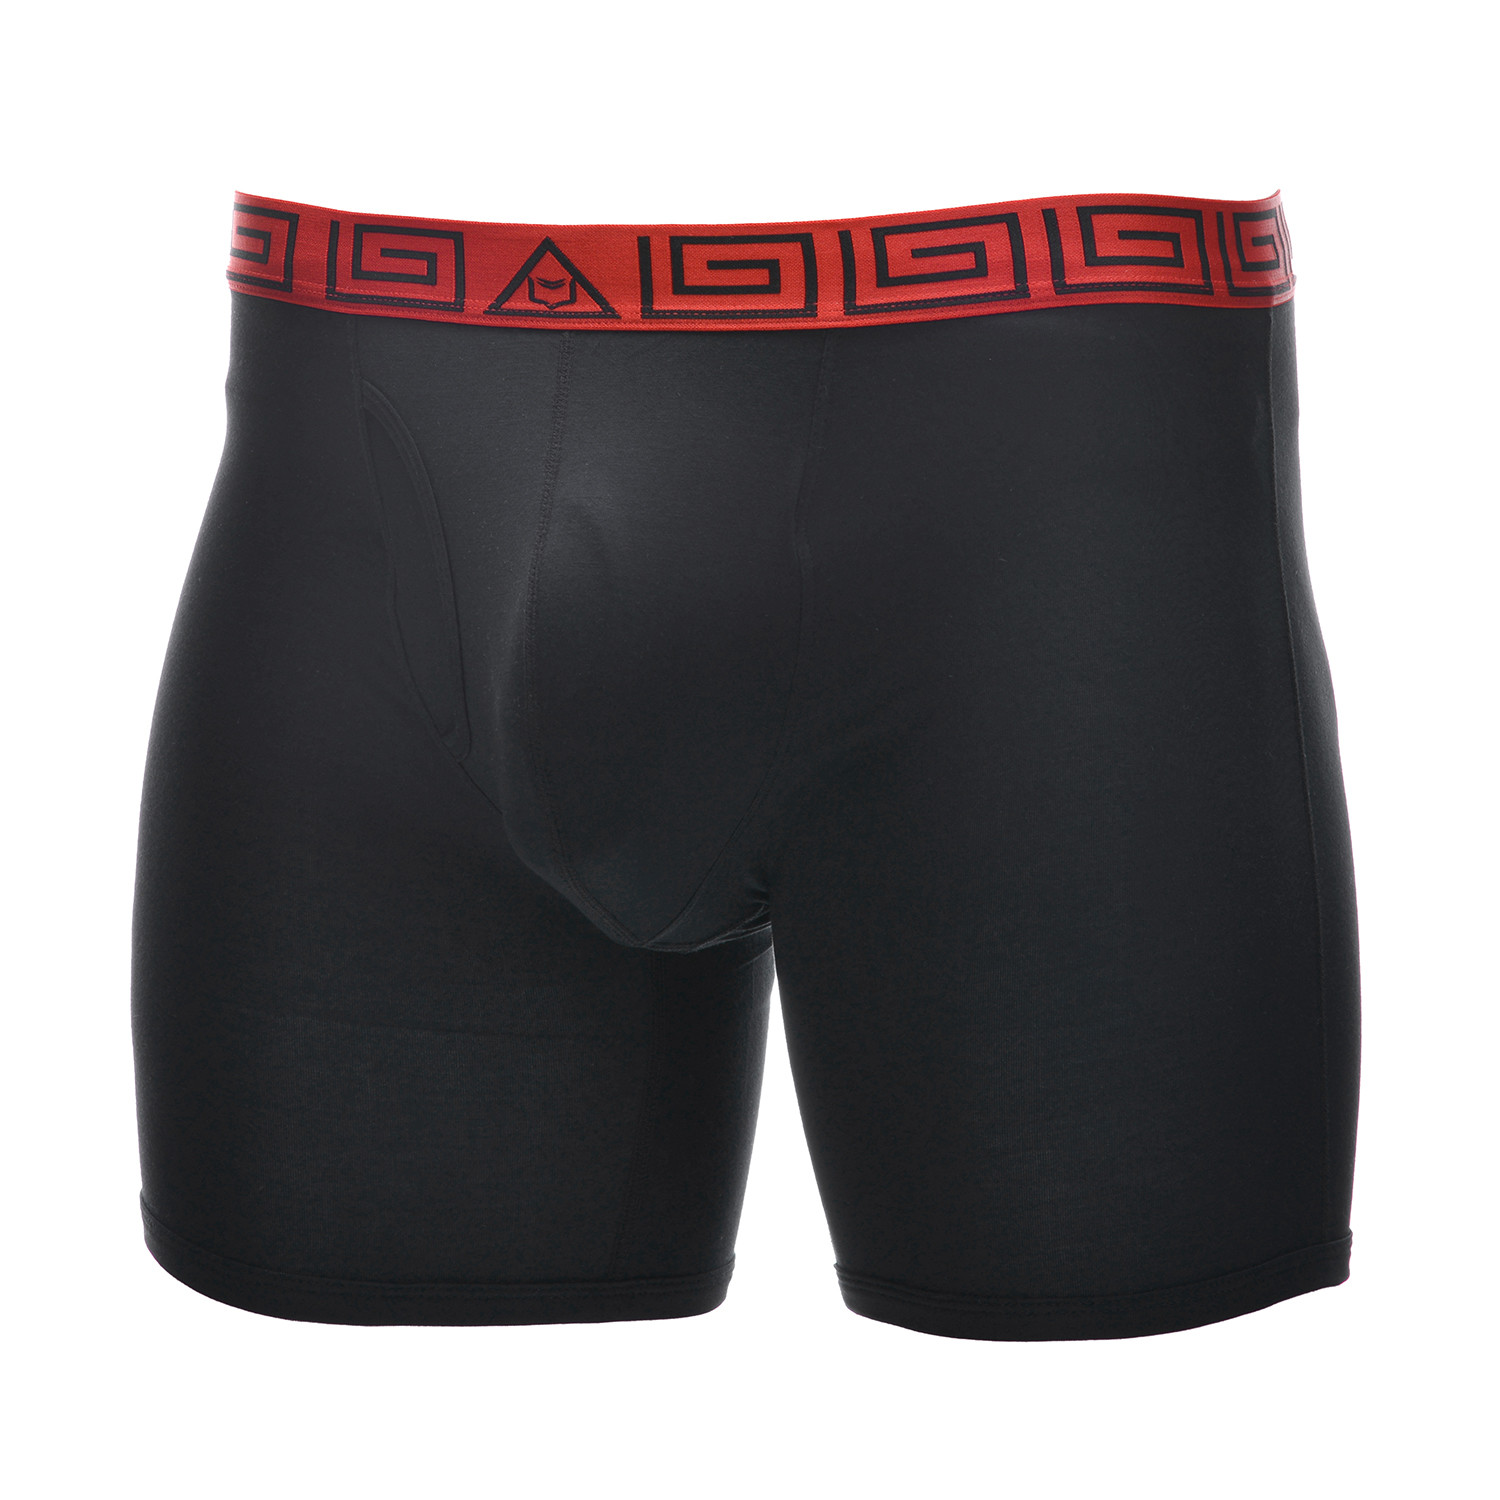 SHEATH 4.0 Men's Dual Pouch Boxer Brief // Red + Black Geo (S) - Sheath ...